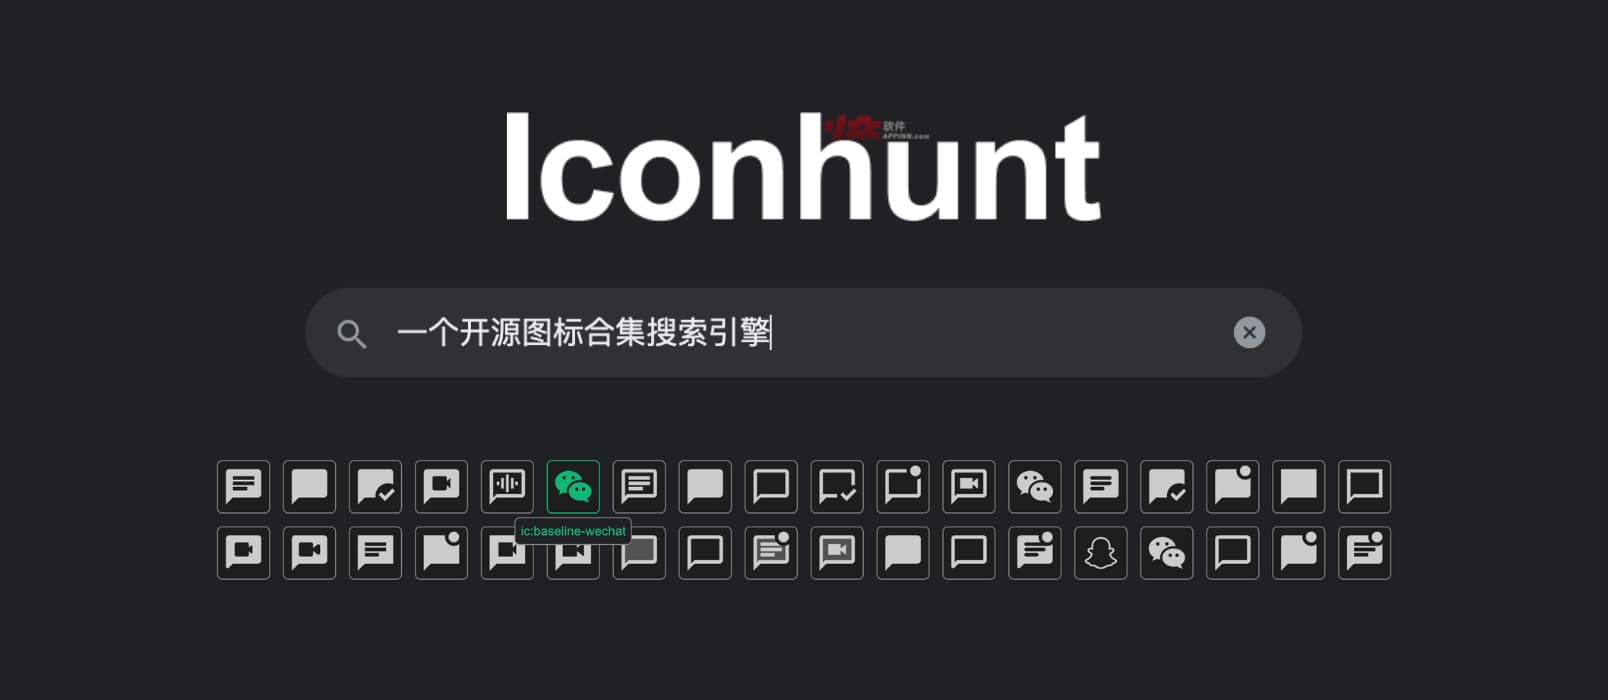 Iconhunt - 15 万张，开源图标合集搜索引擎，可快速复制到 Notion、Figma 等环境